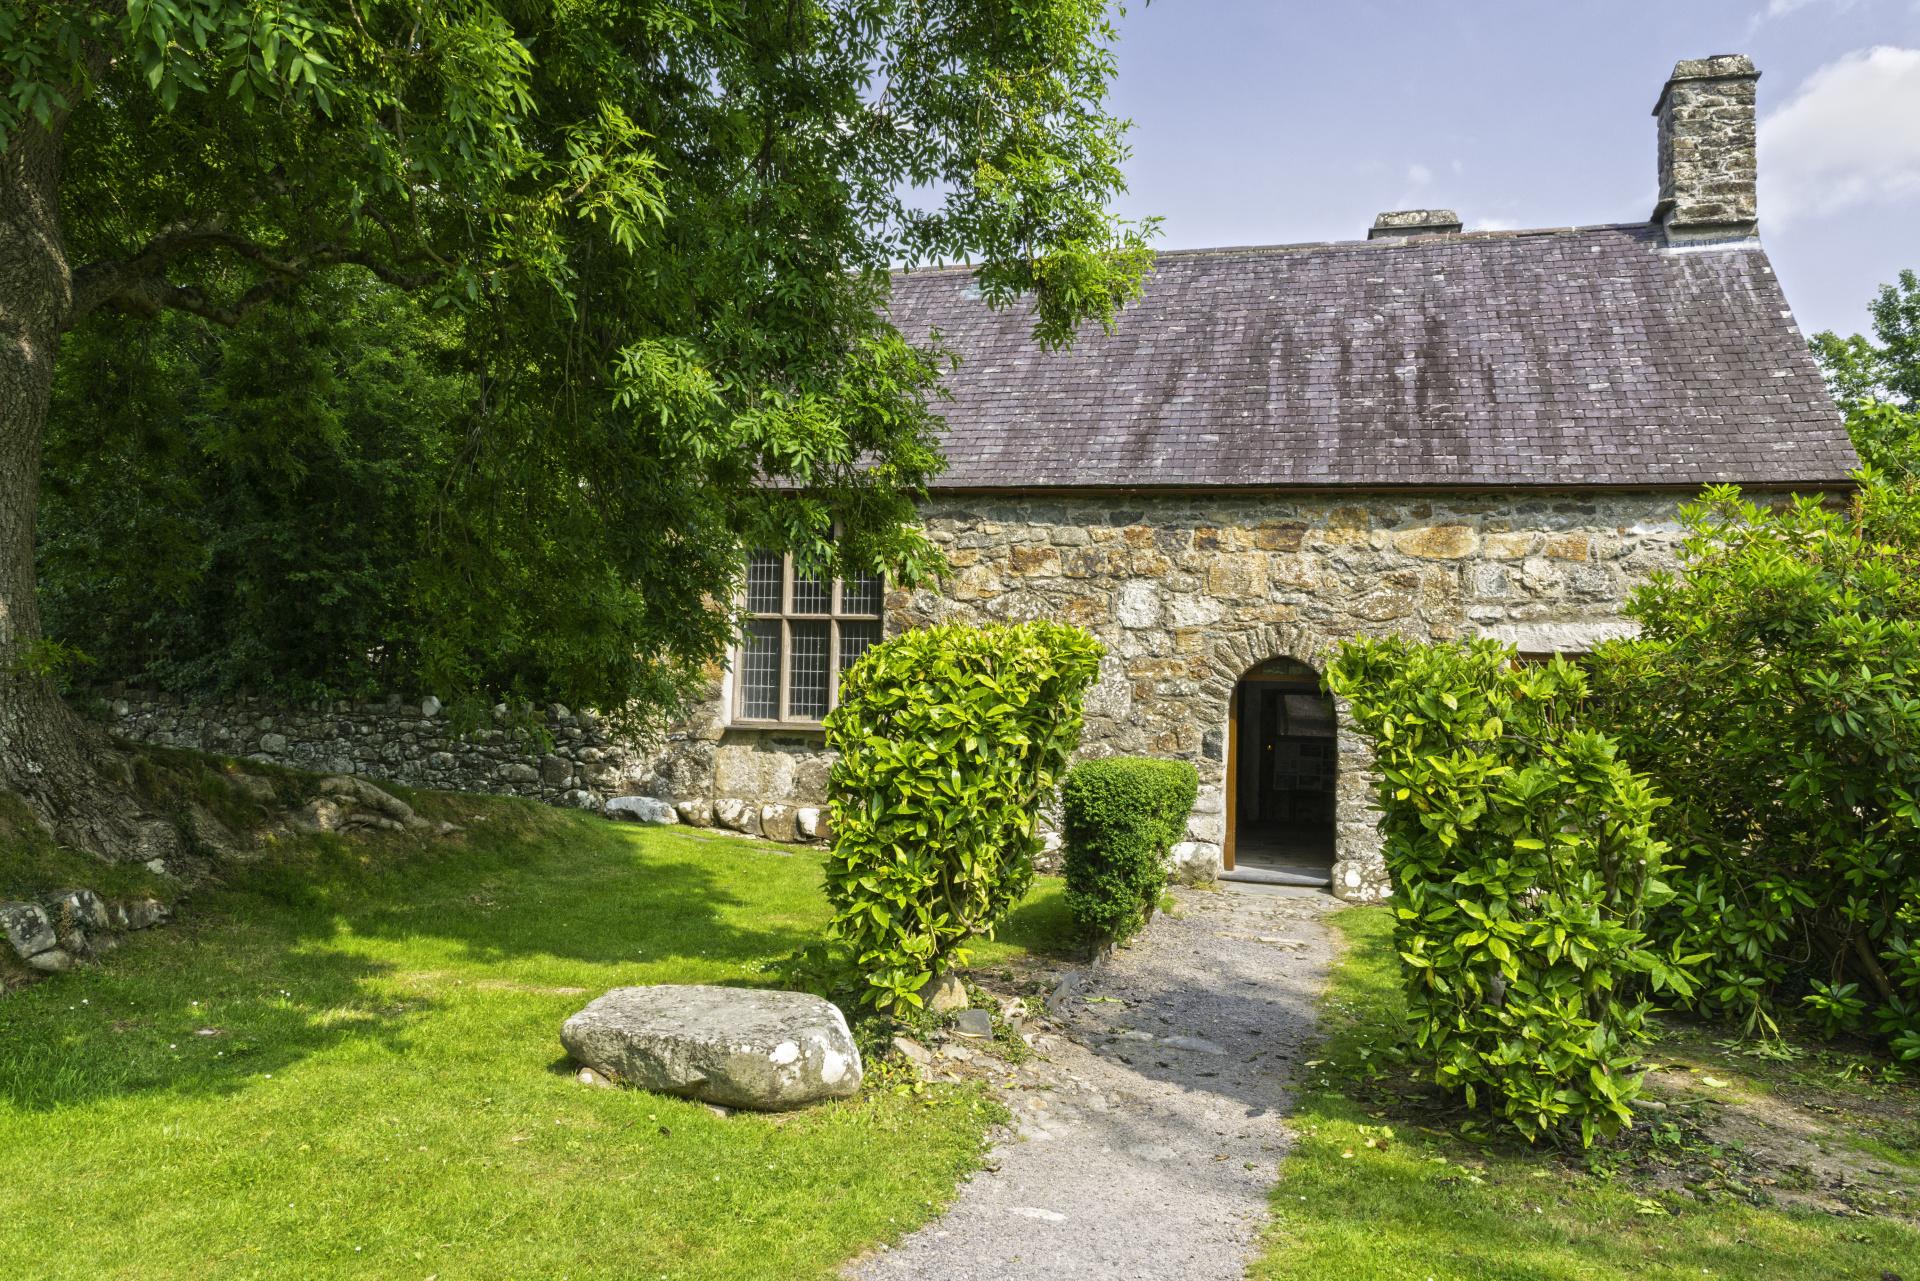  Tŷ Canoloesol Penarth Fawr/Penarth Fawr Medieval House